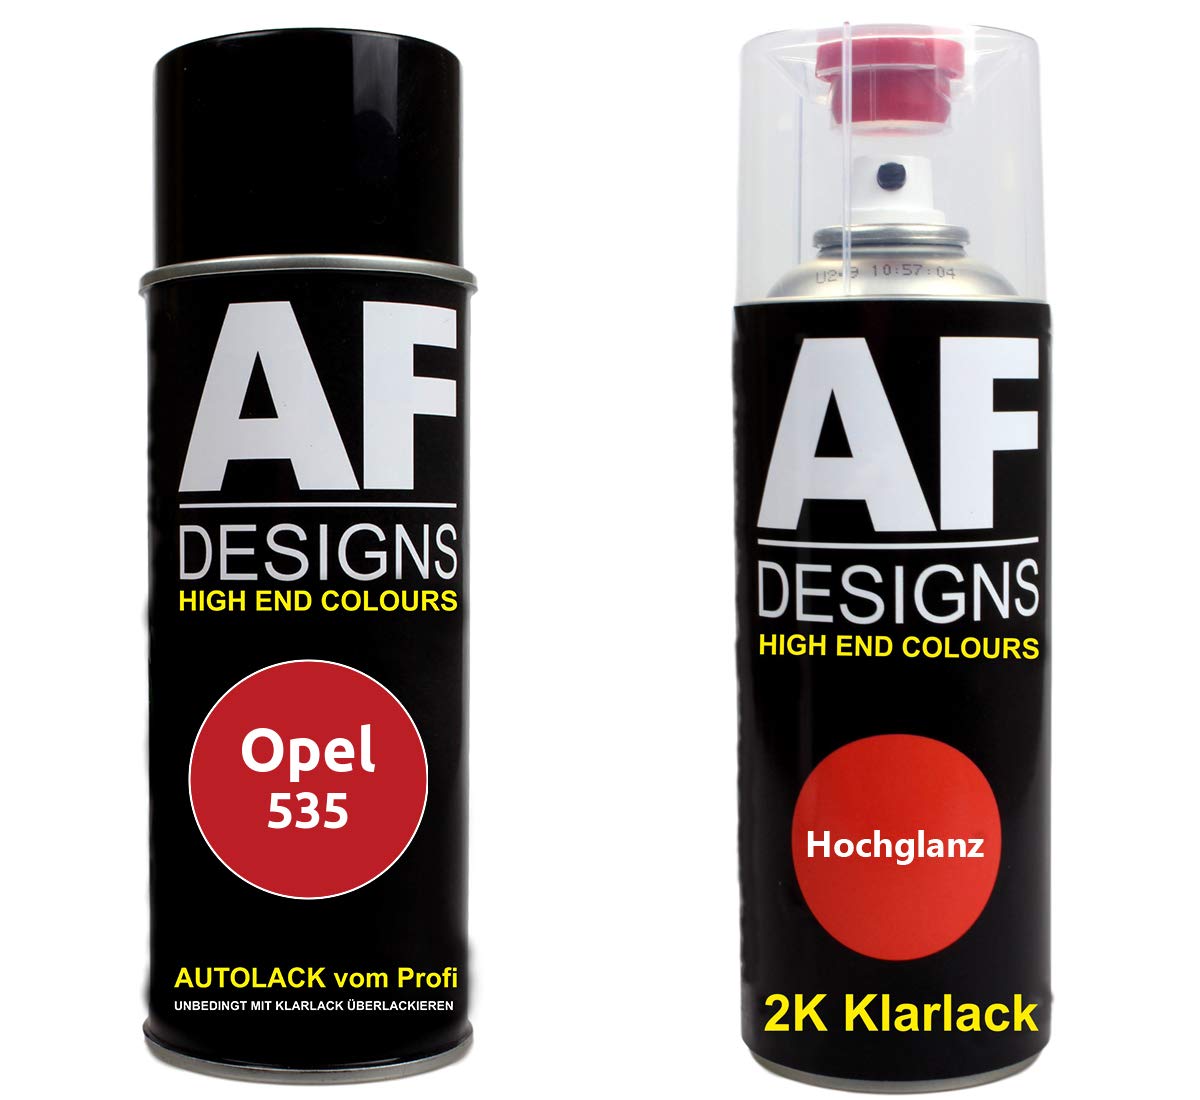 Autolack Spraydose Set für Opel 535 Karminrot 2K Klarlack Basislack Sprühdose Spraydosen 2x400ml von Alex Flittner Designs